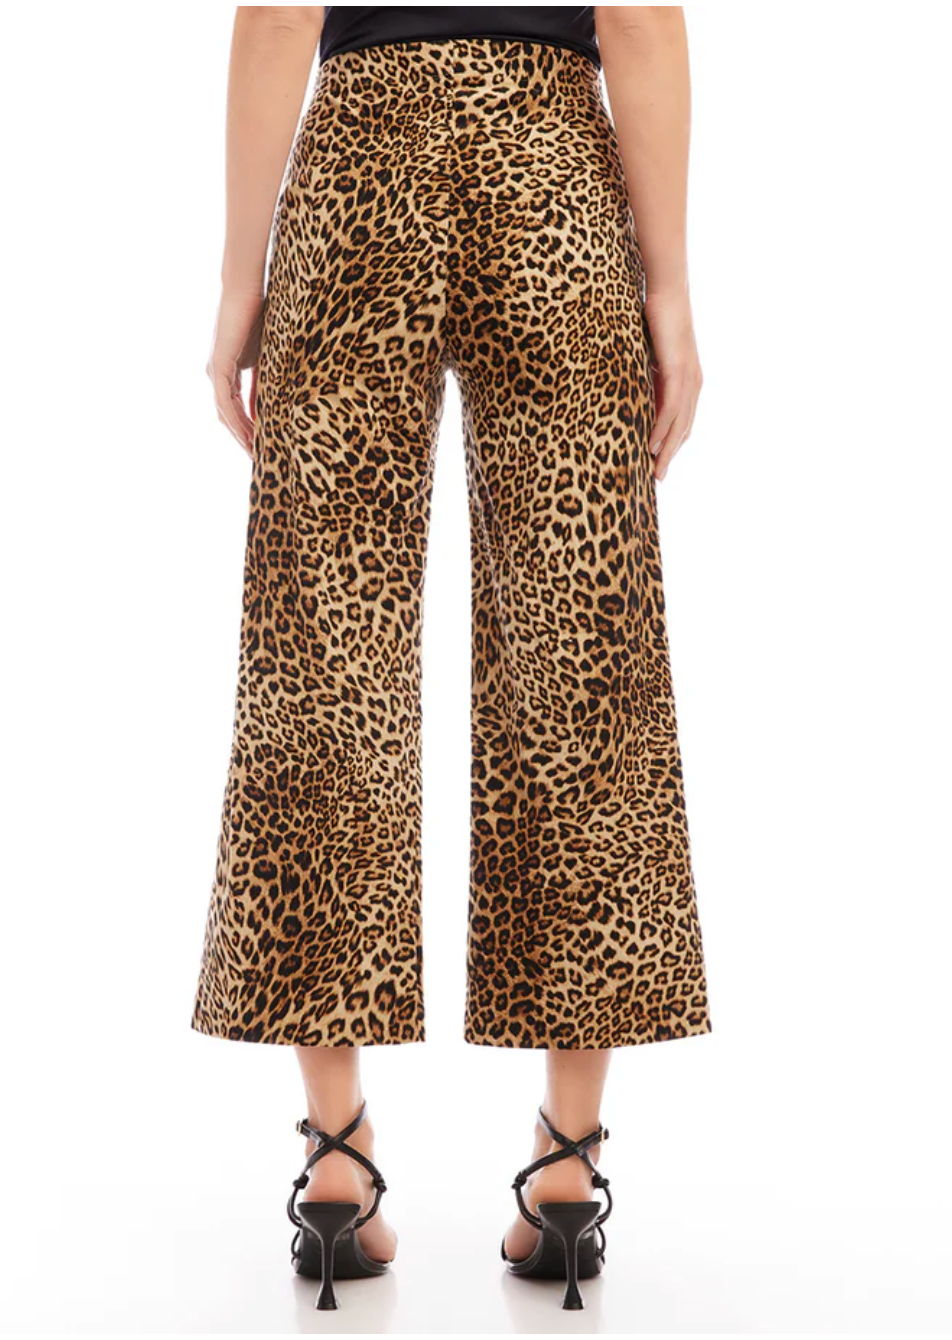 Karen Kane Karen Kane - Cropped Cordoroy Pants - Leopard available at The Good Life Boutique